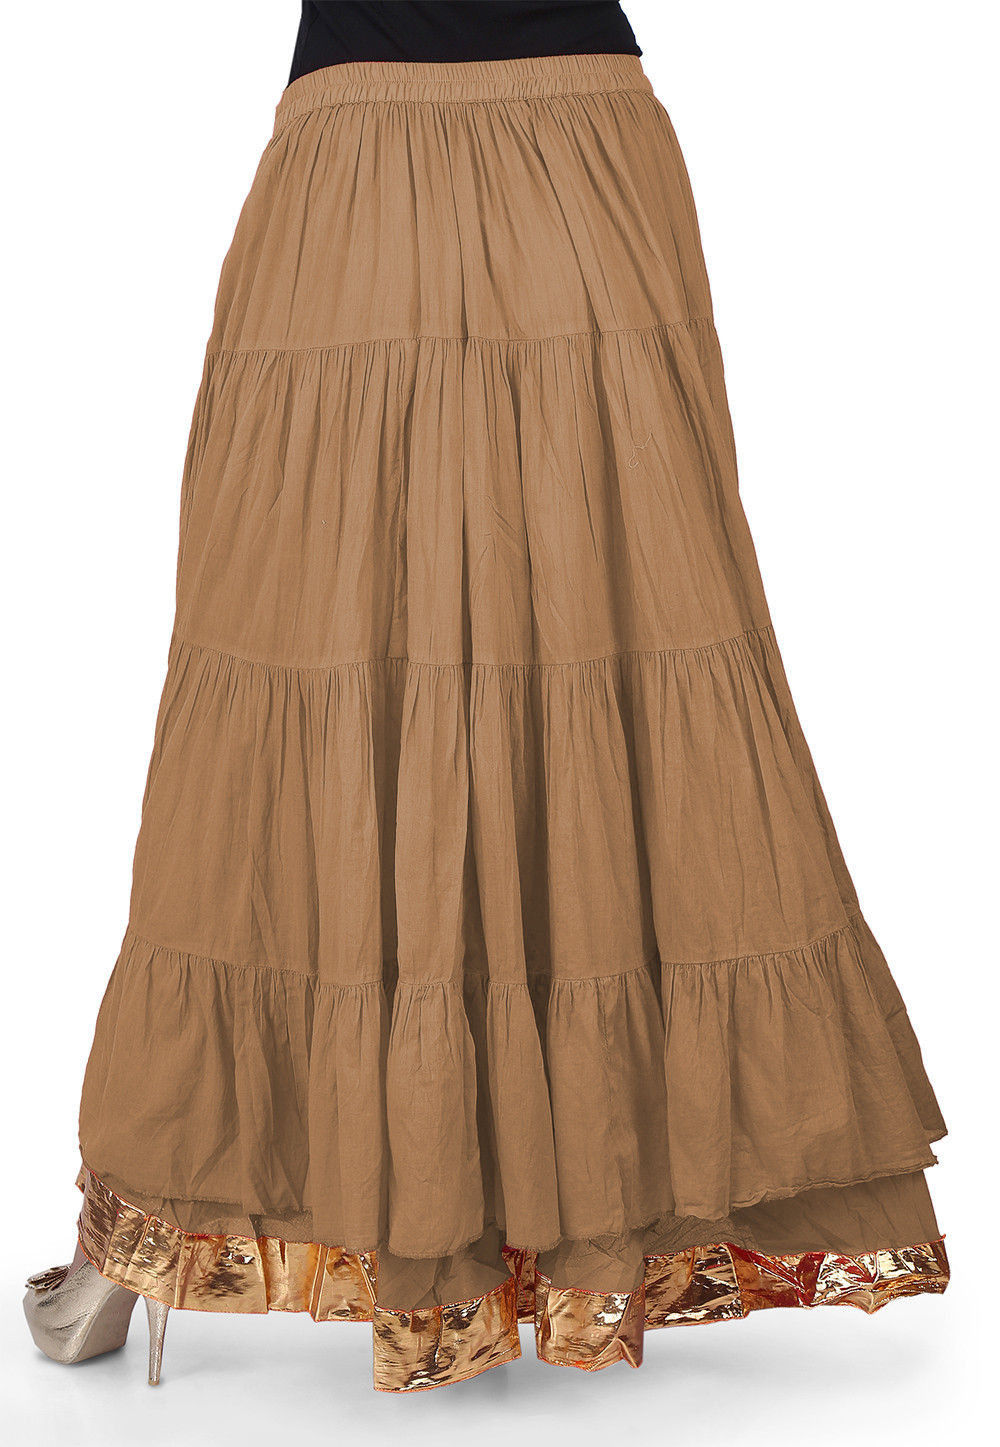 Buy Solid Color Cotton Mulmul Skirts in Dark Beige Online : BJG66 ...